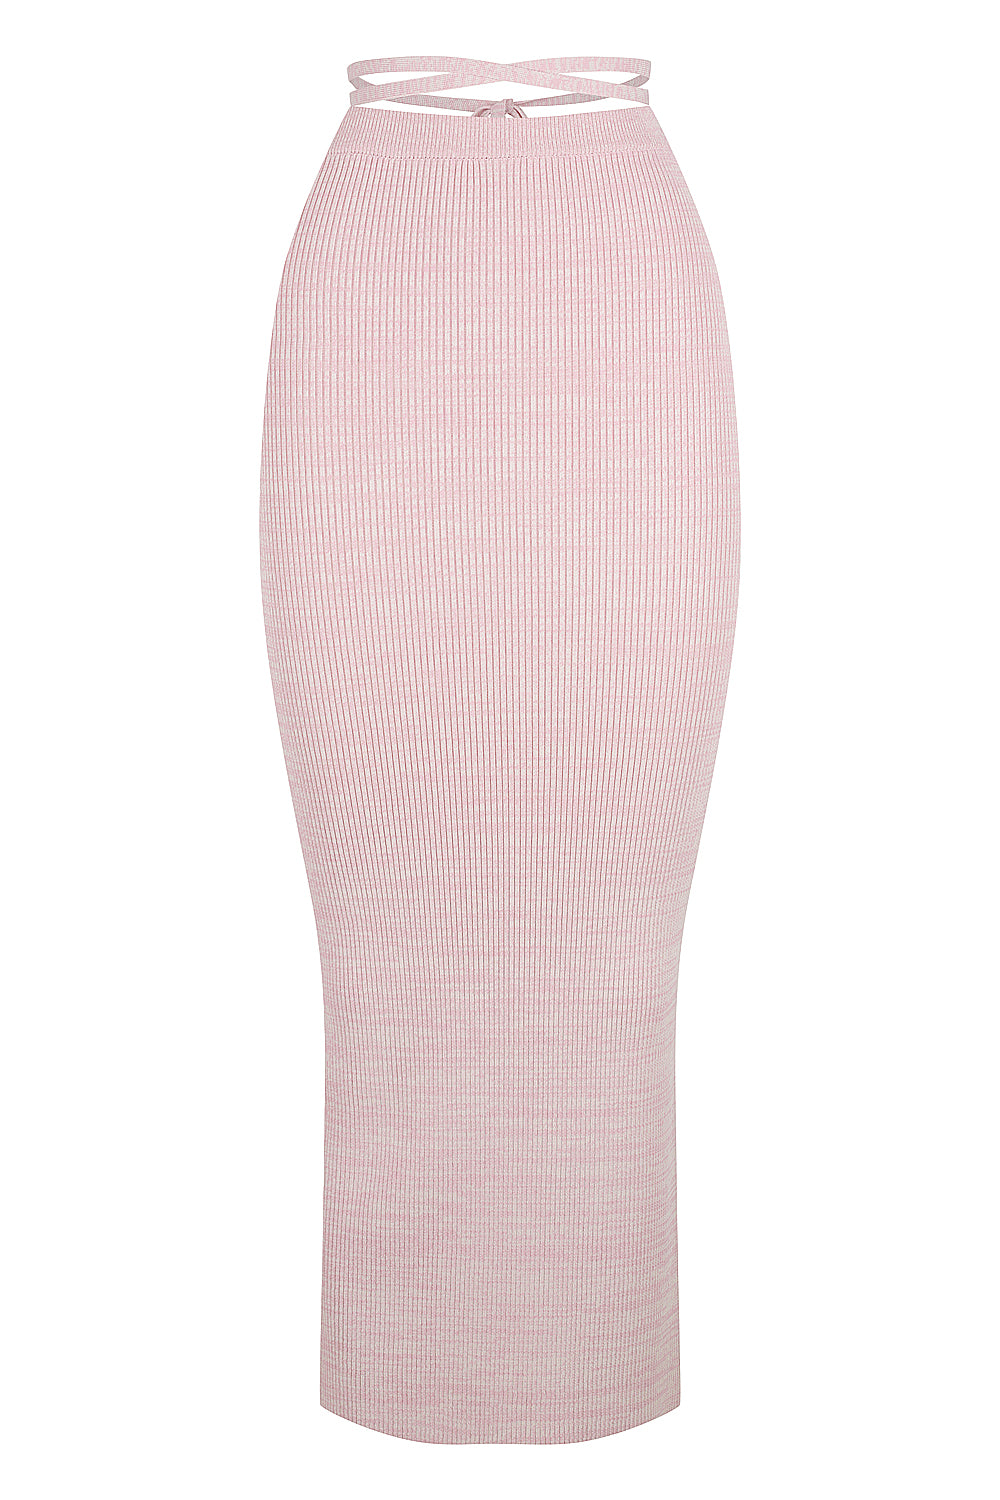 Savannah Space Dye Knit Skirt - Porcelain Pink / Vanilla